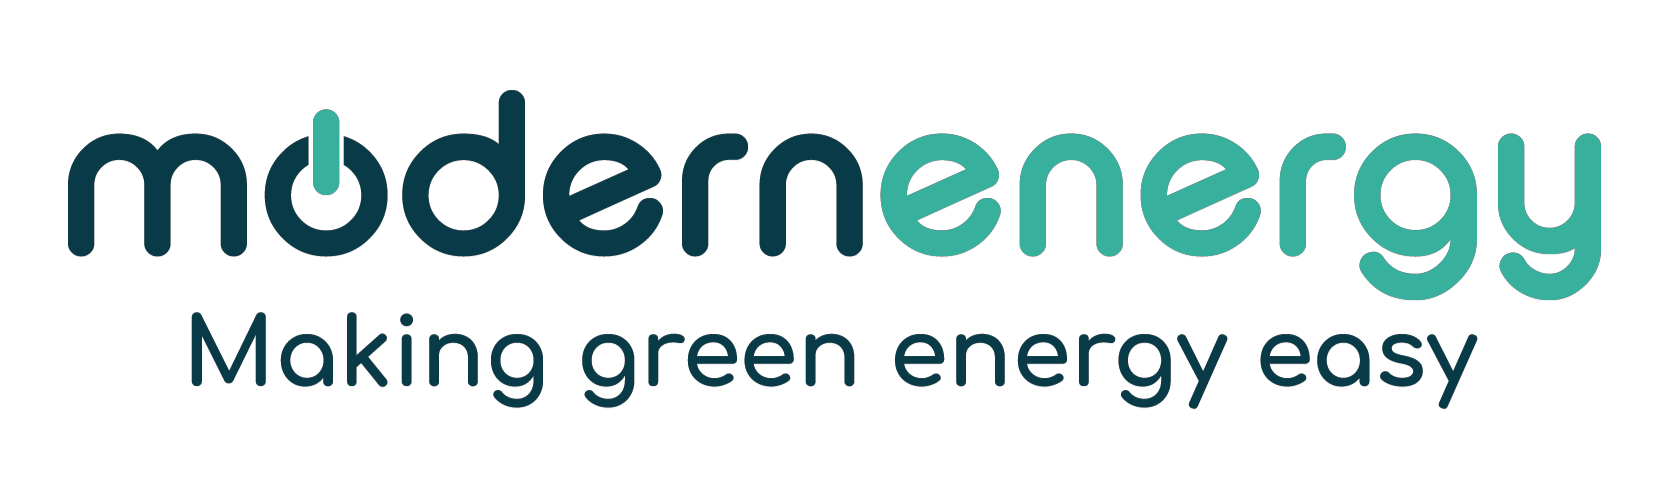 ModernEnergy logo met slogan